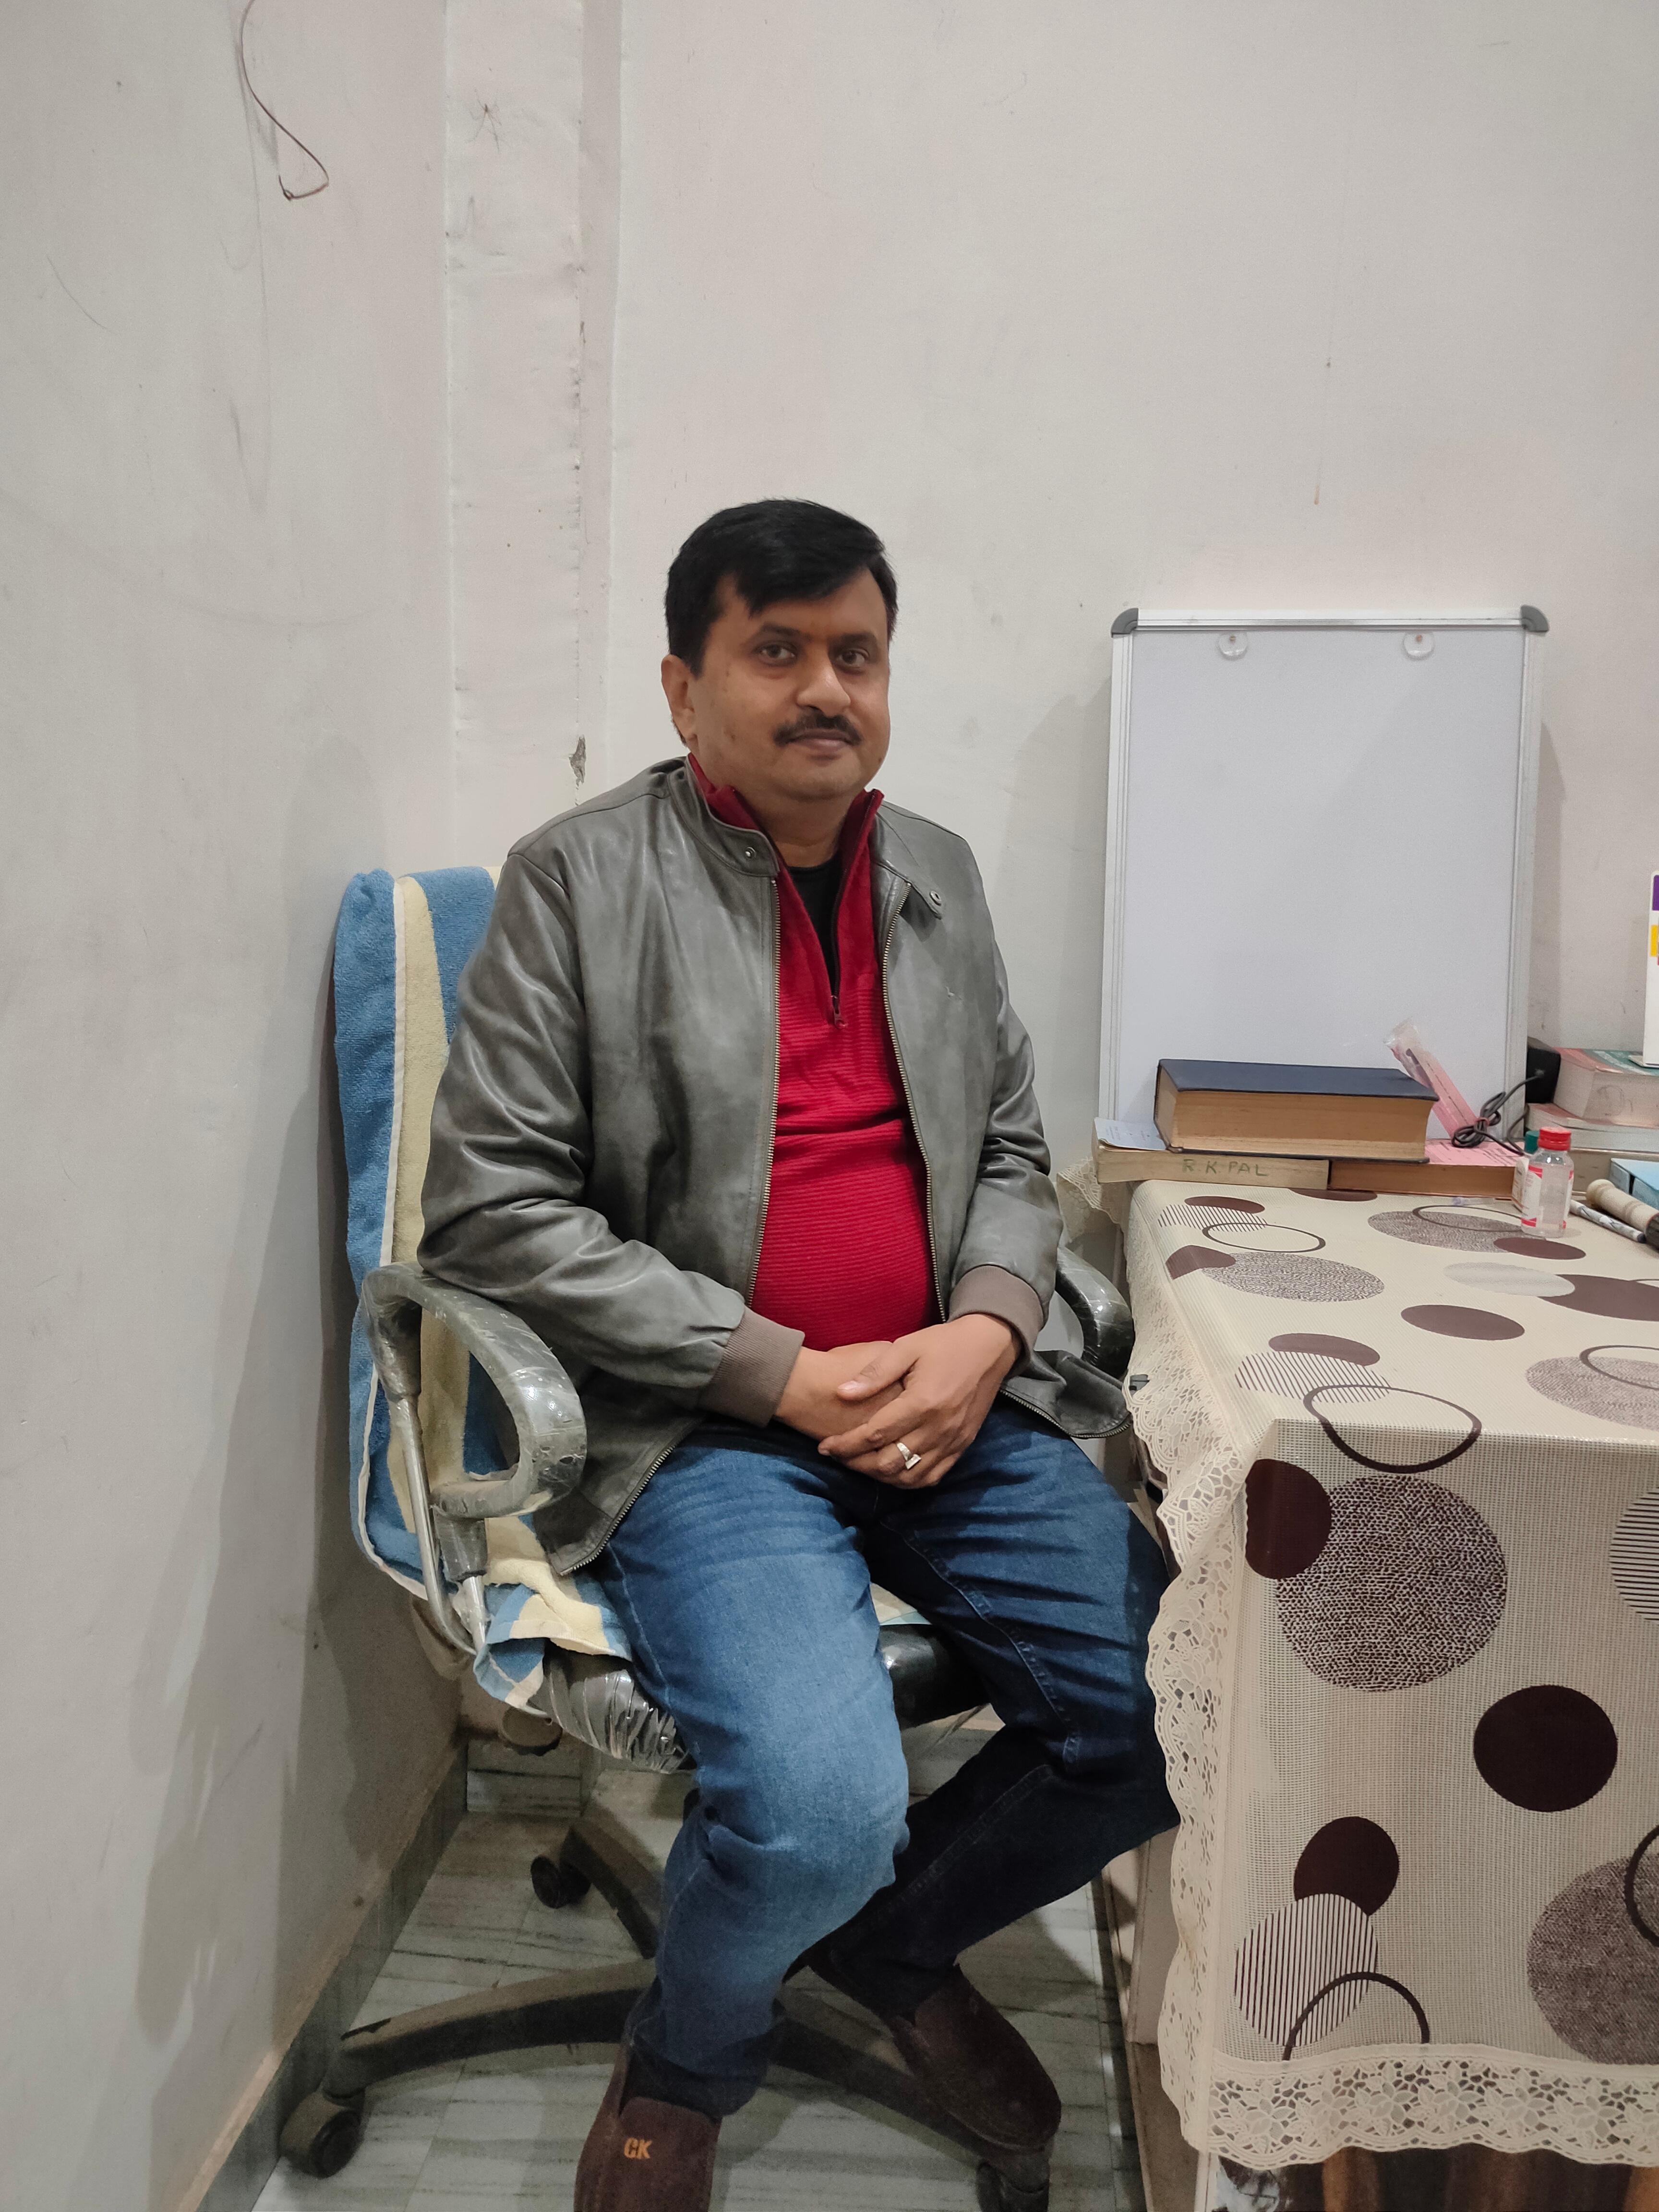 Dr. Sanjay Kumar Pandey